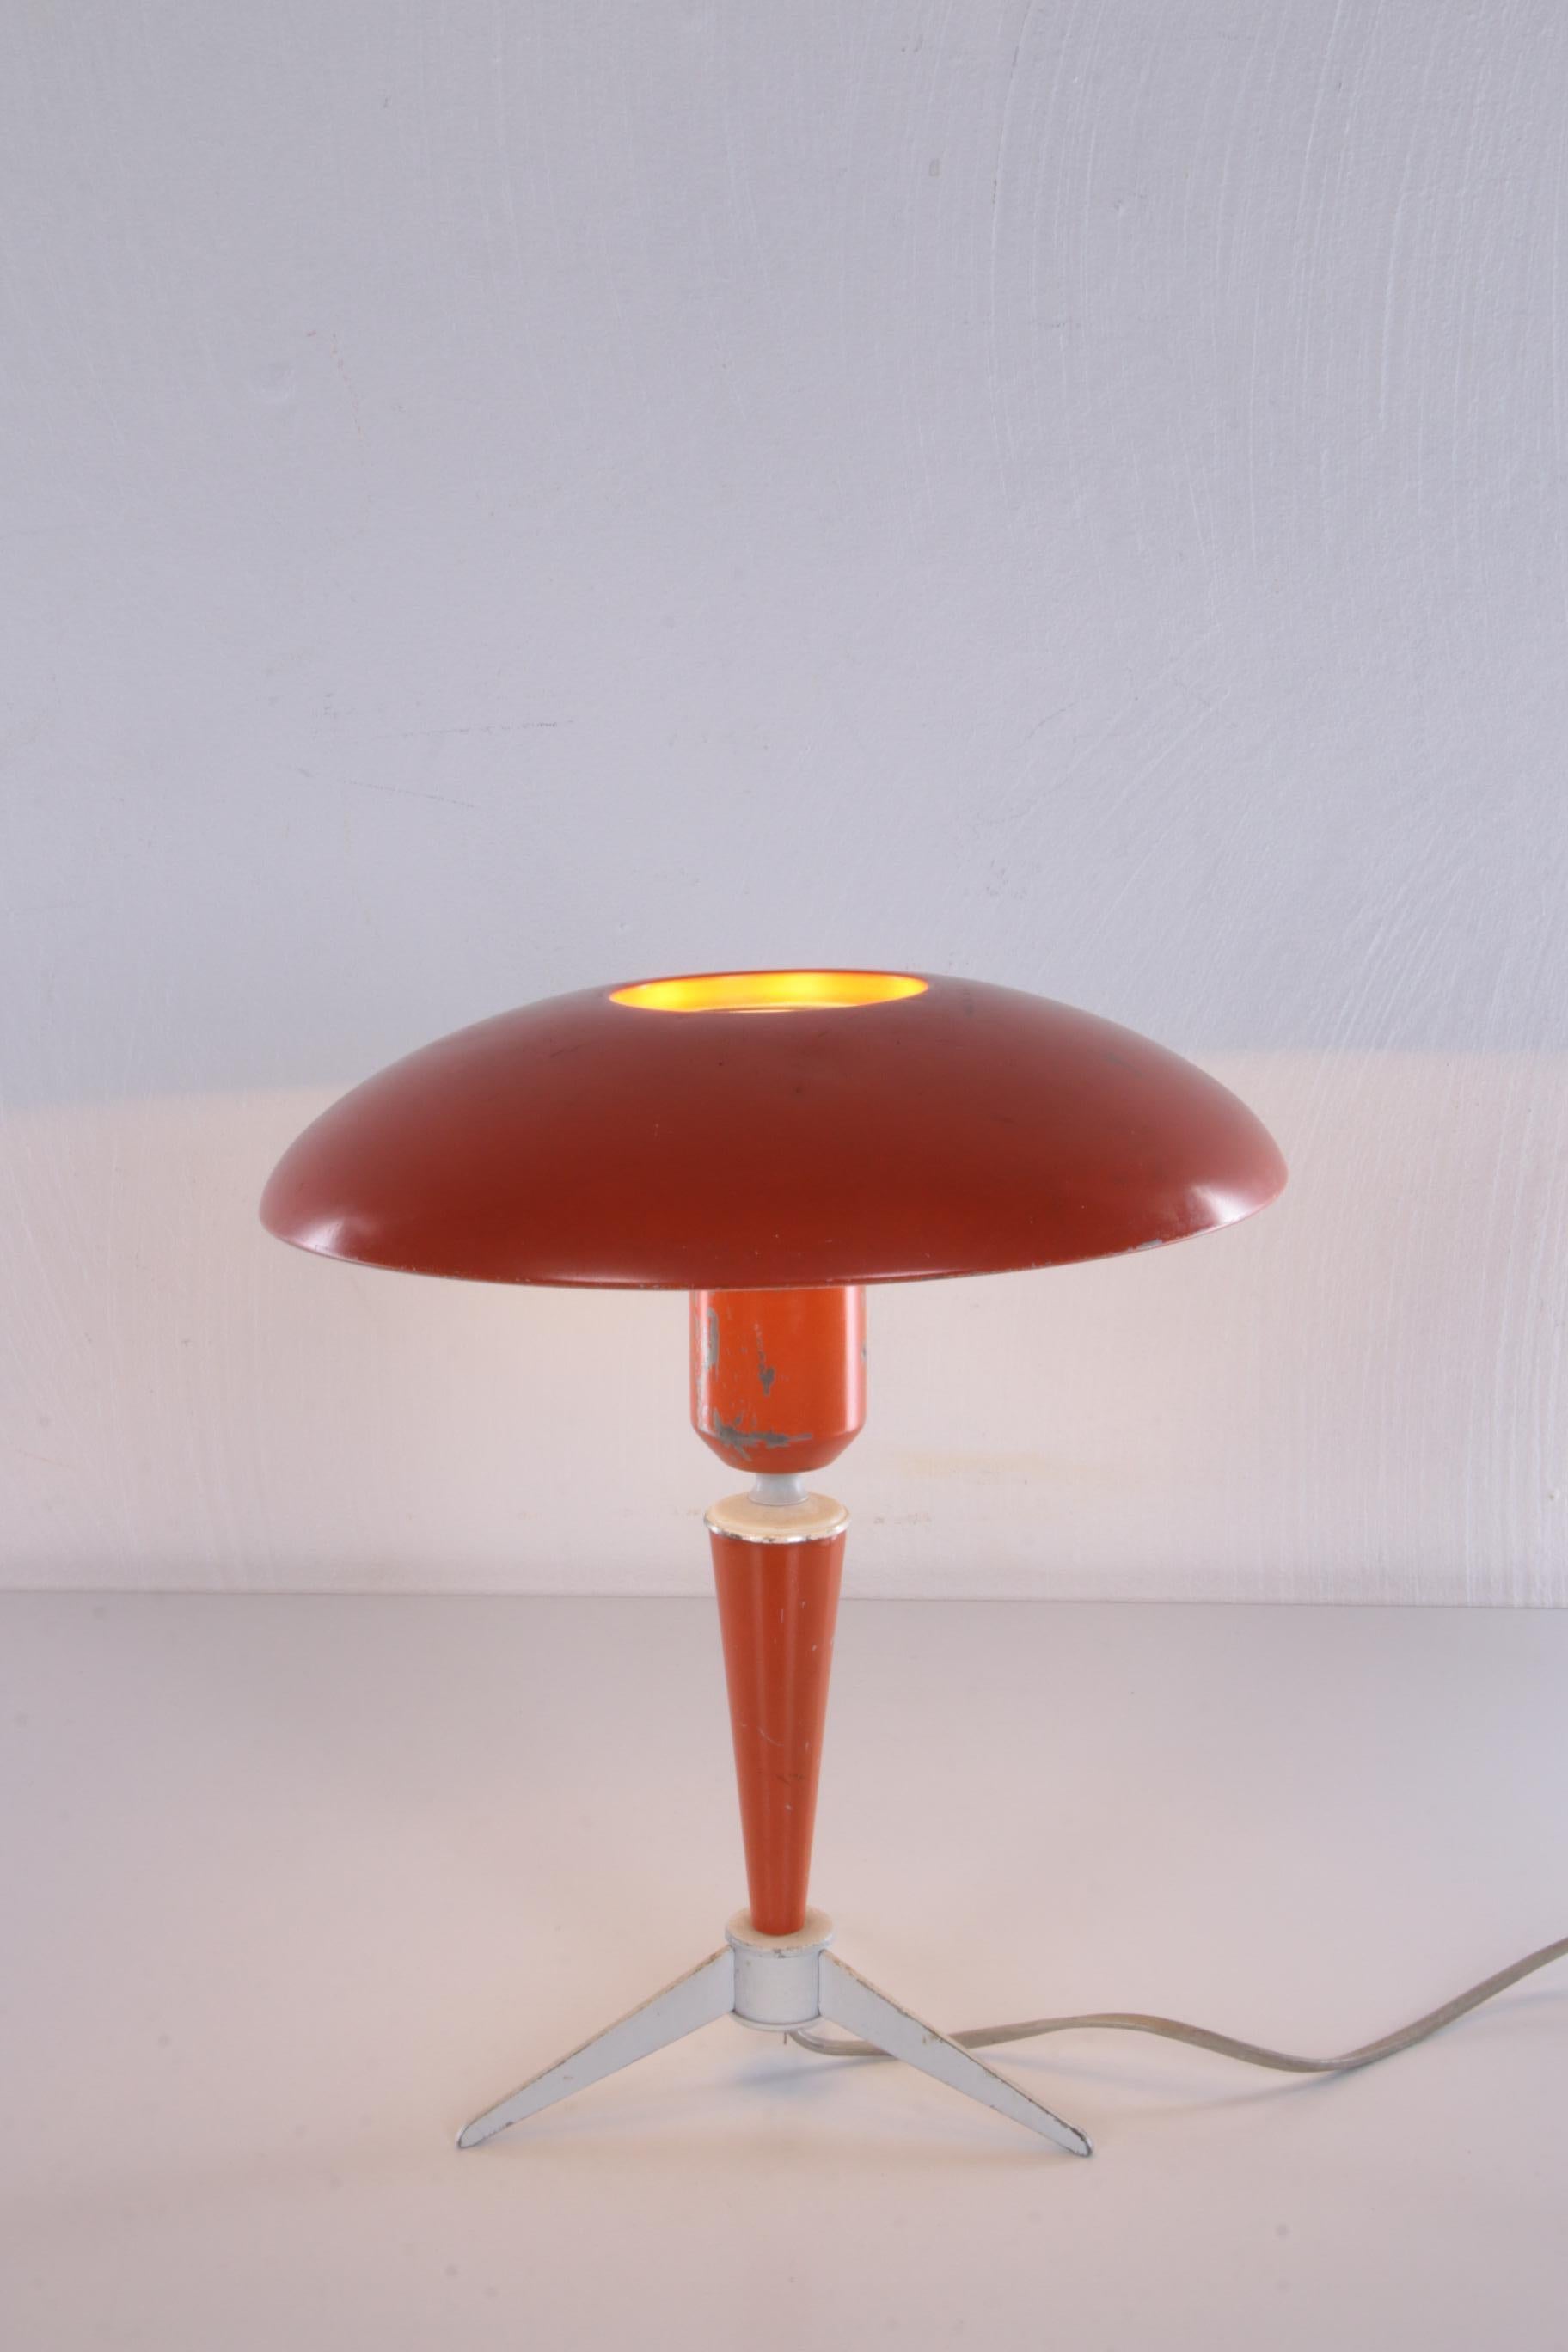 Dutch Tripod Table Lamp “Bijou” by Louis Kalff for Philips, 1950s